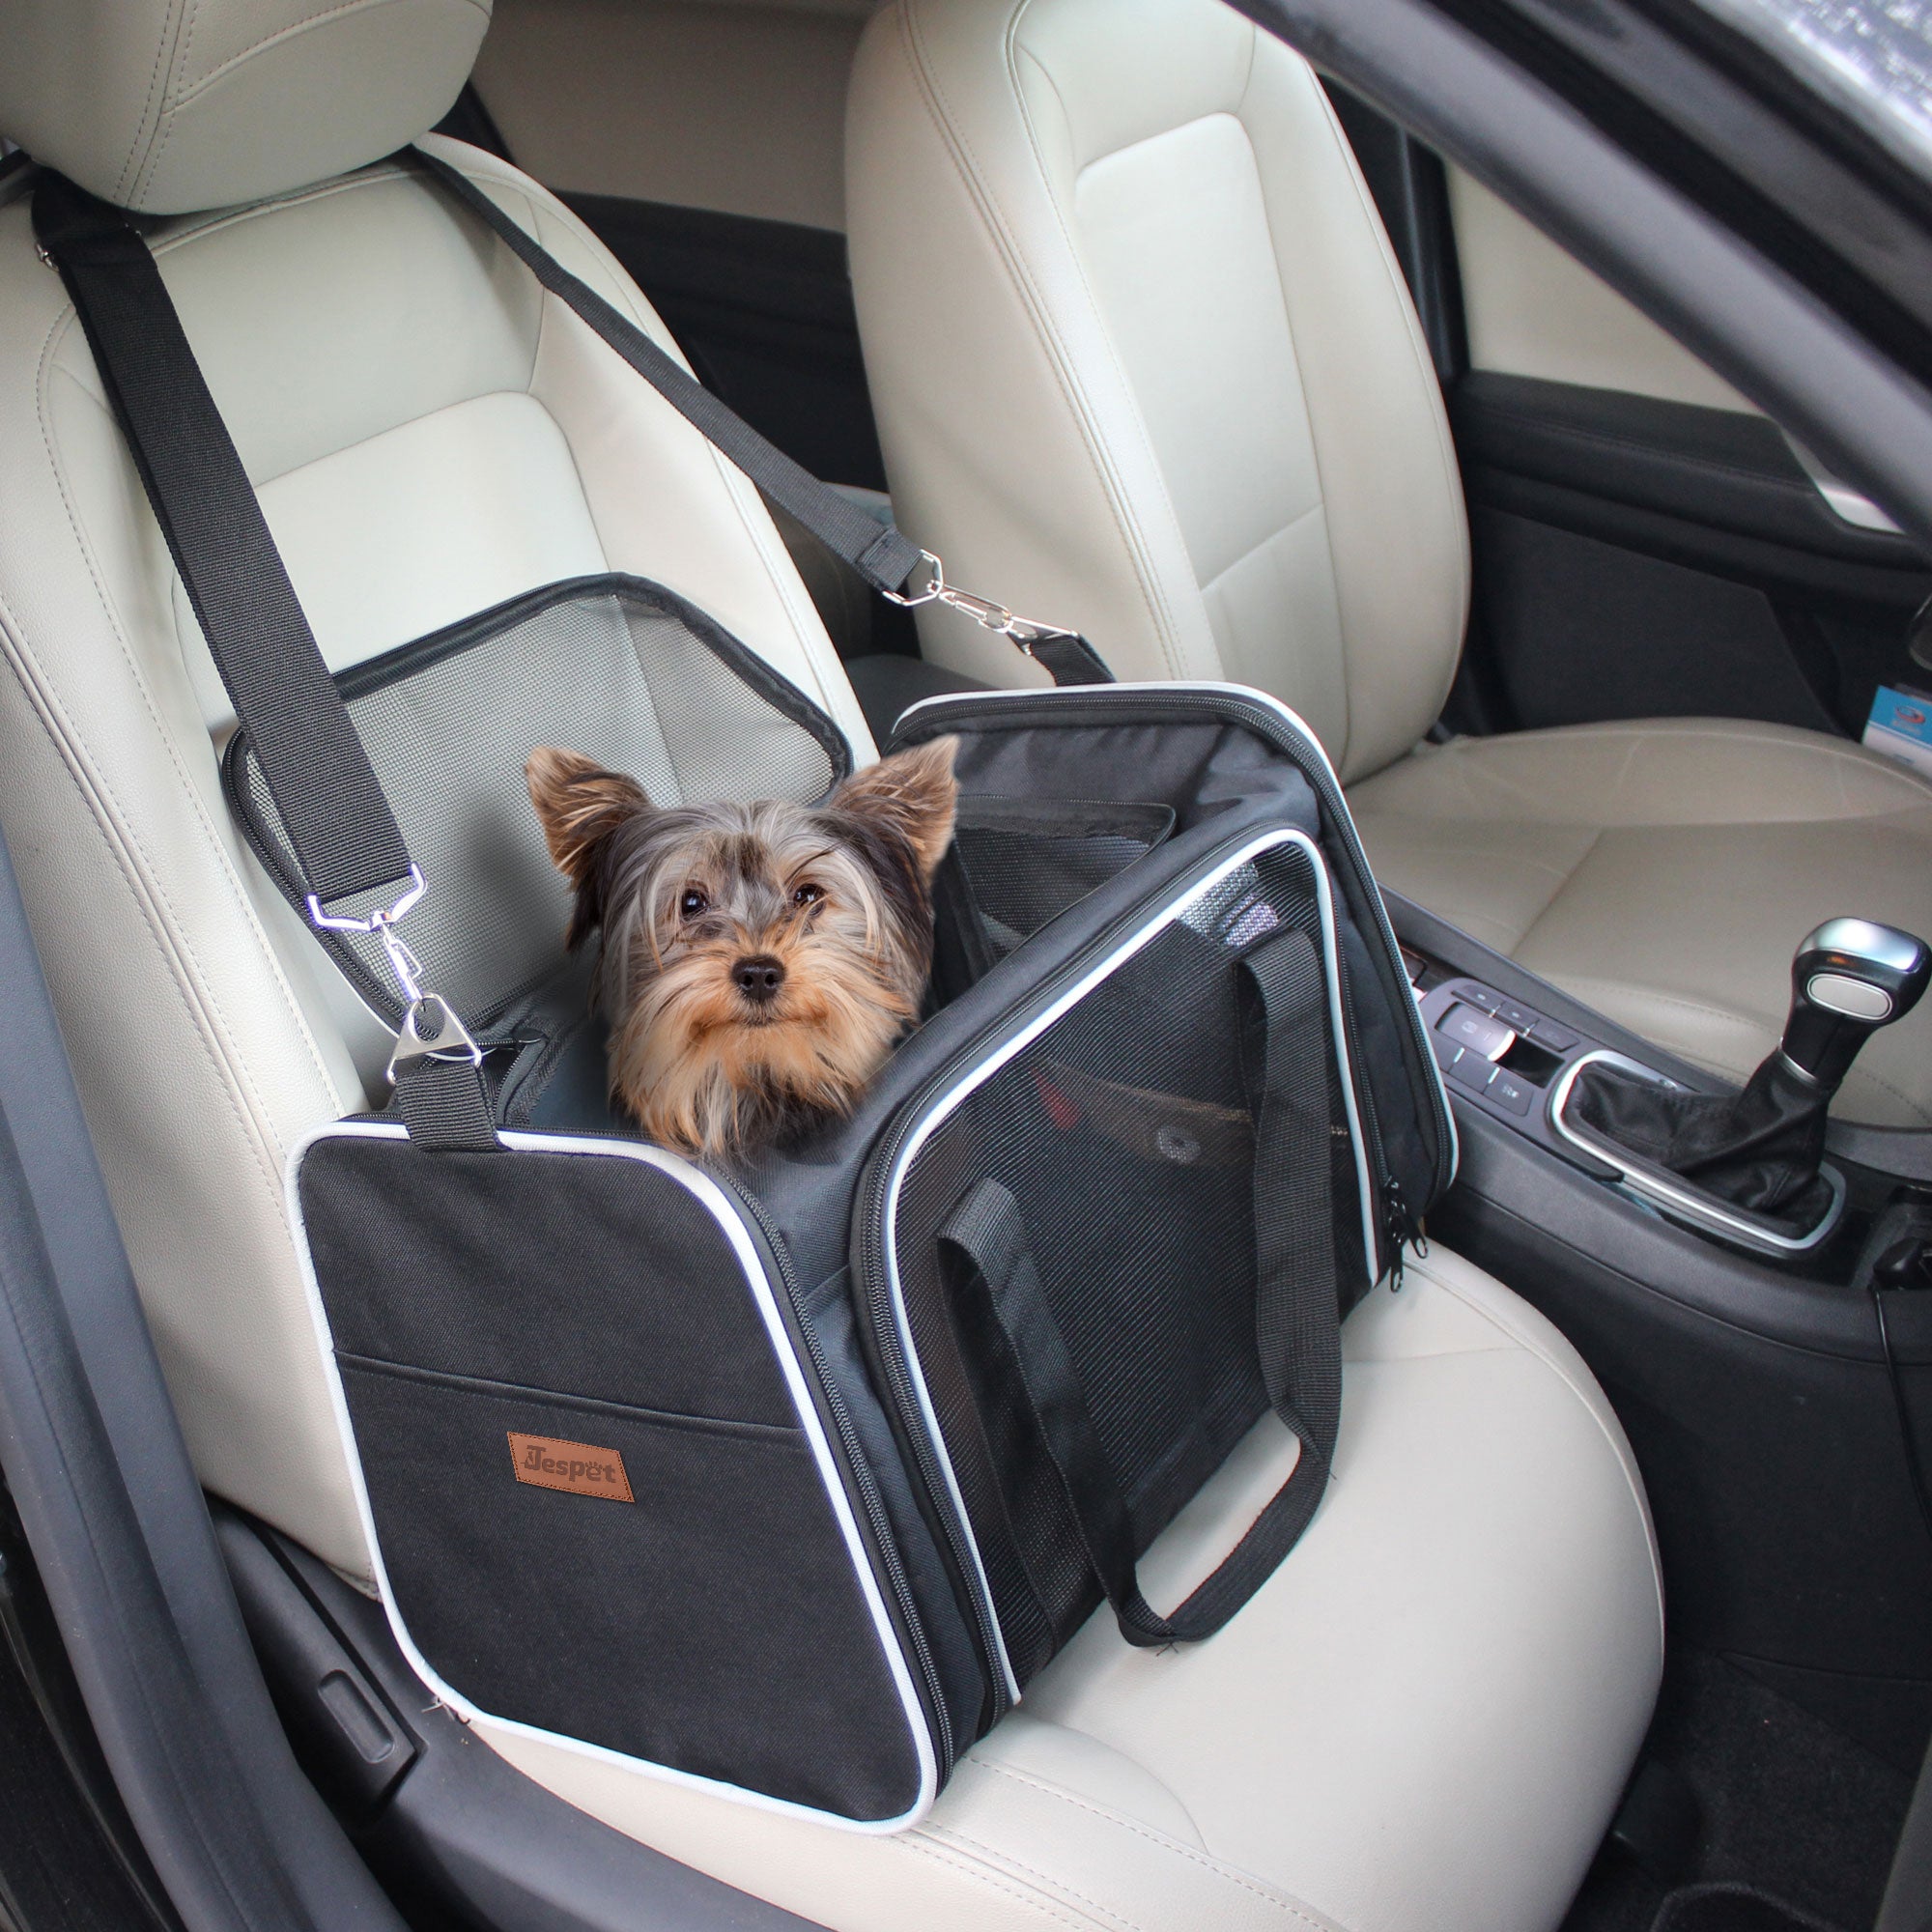 Jespet Soft-Sided Travel Small Dog & Cat Carrier Bag, Black/Grey, 19''